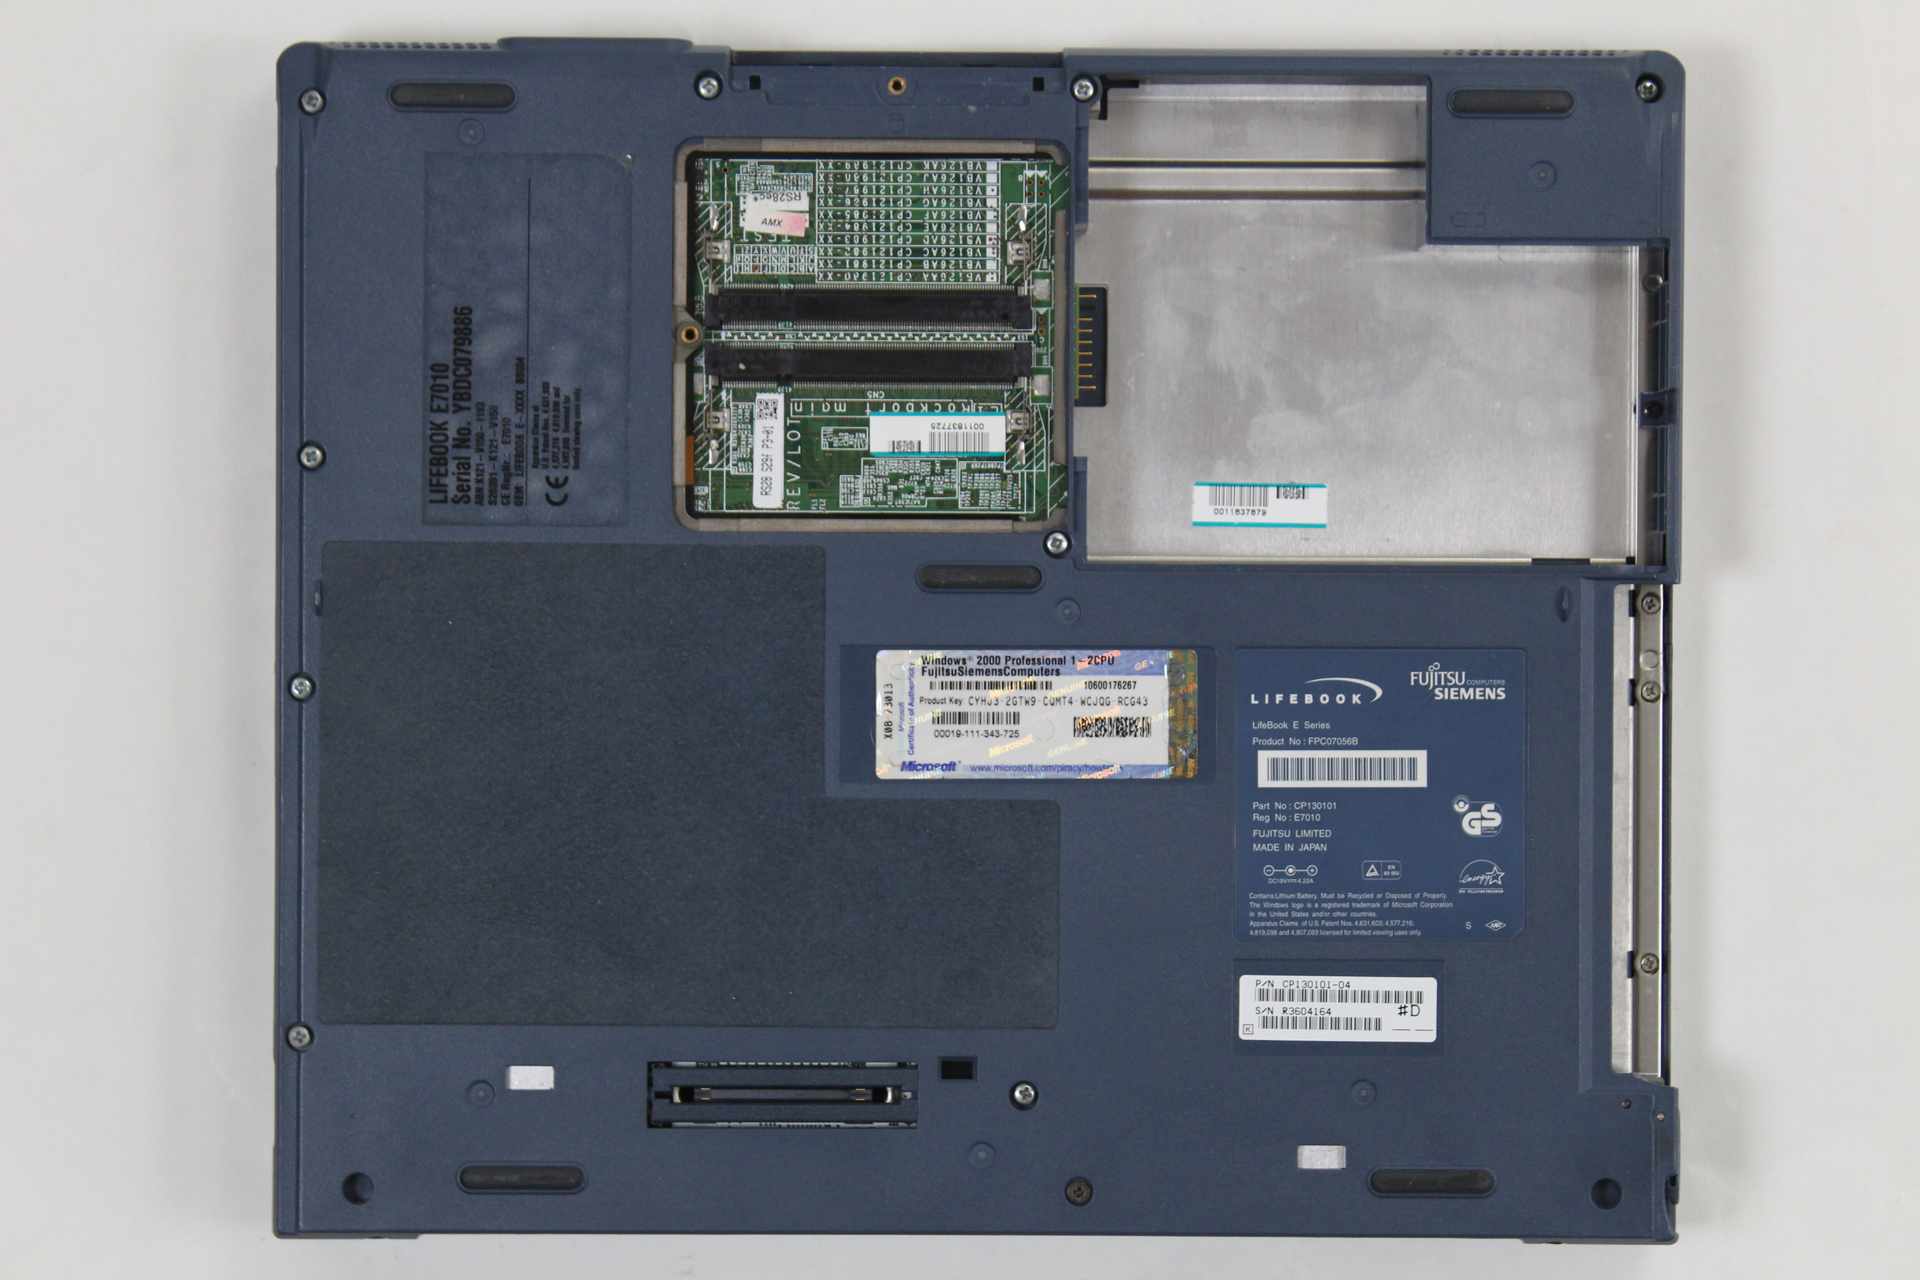 Fujitsu Siemens Lifebook E7010